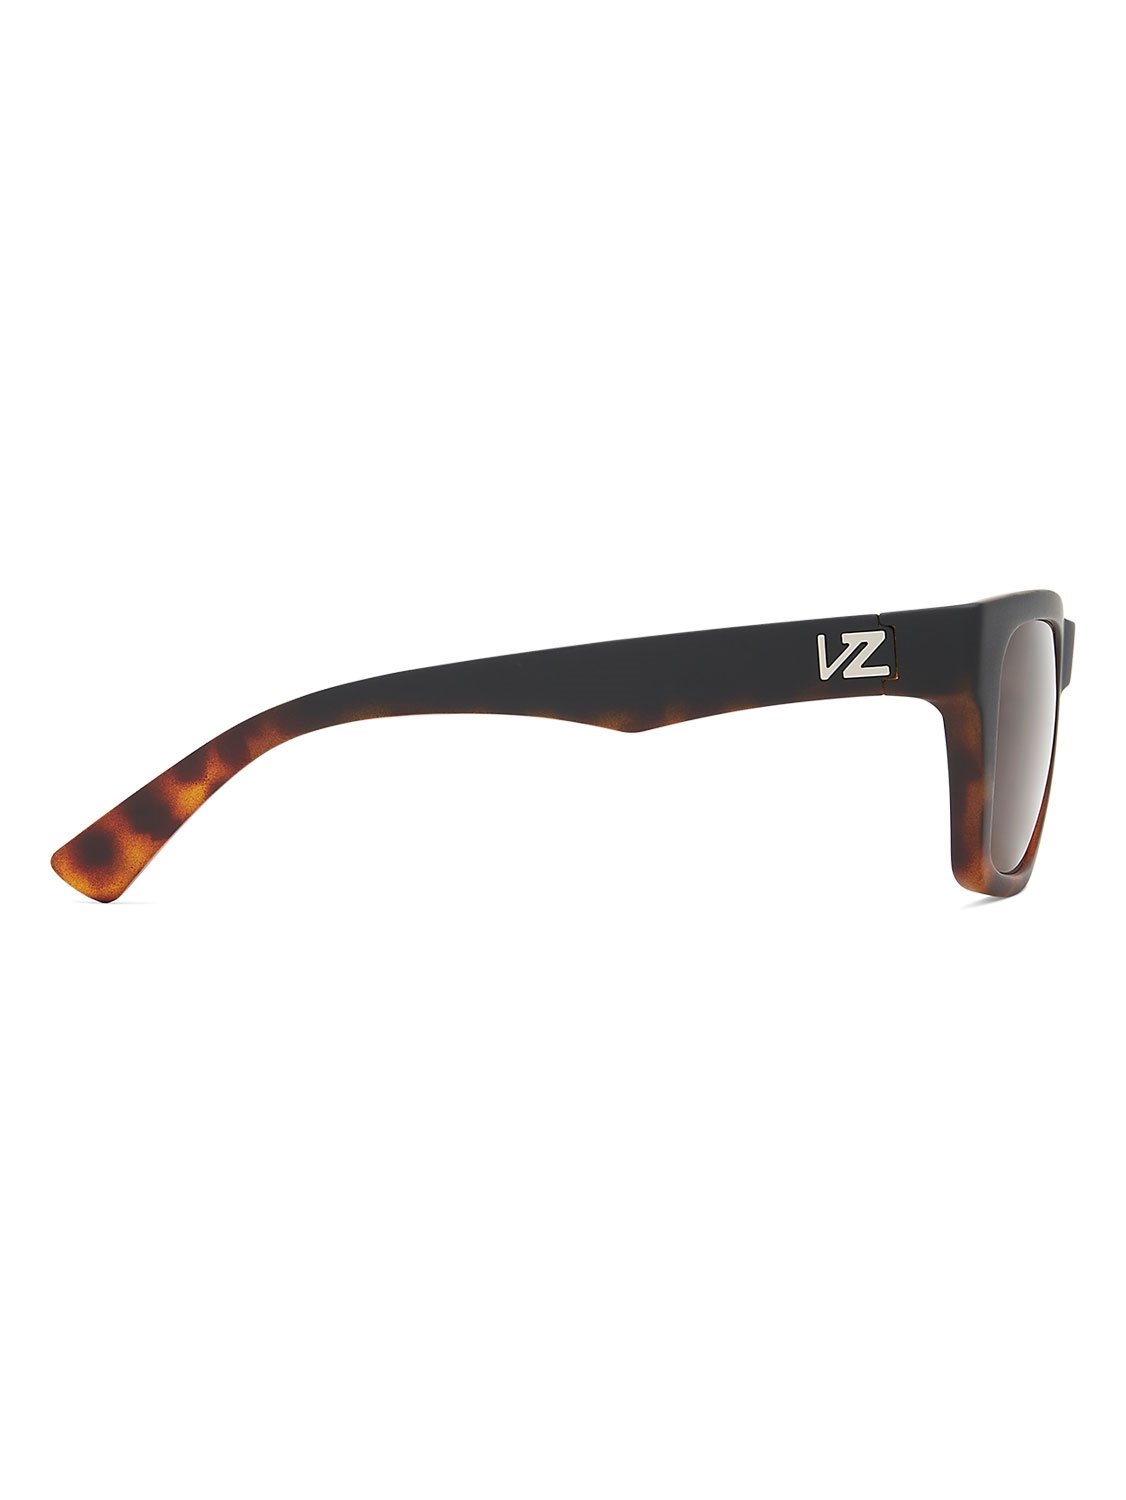 VonZipper Unisex Mode Sunglasses